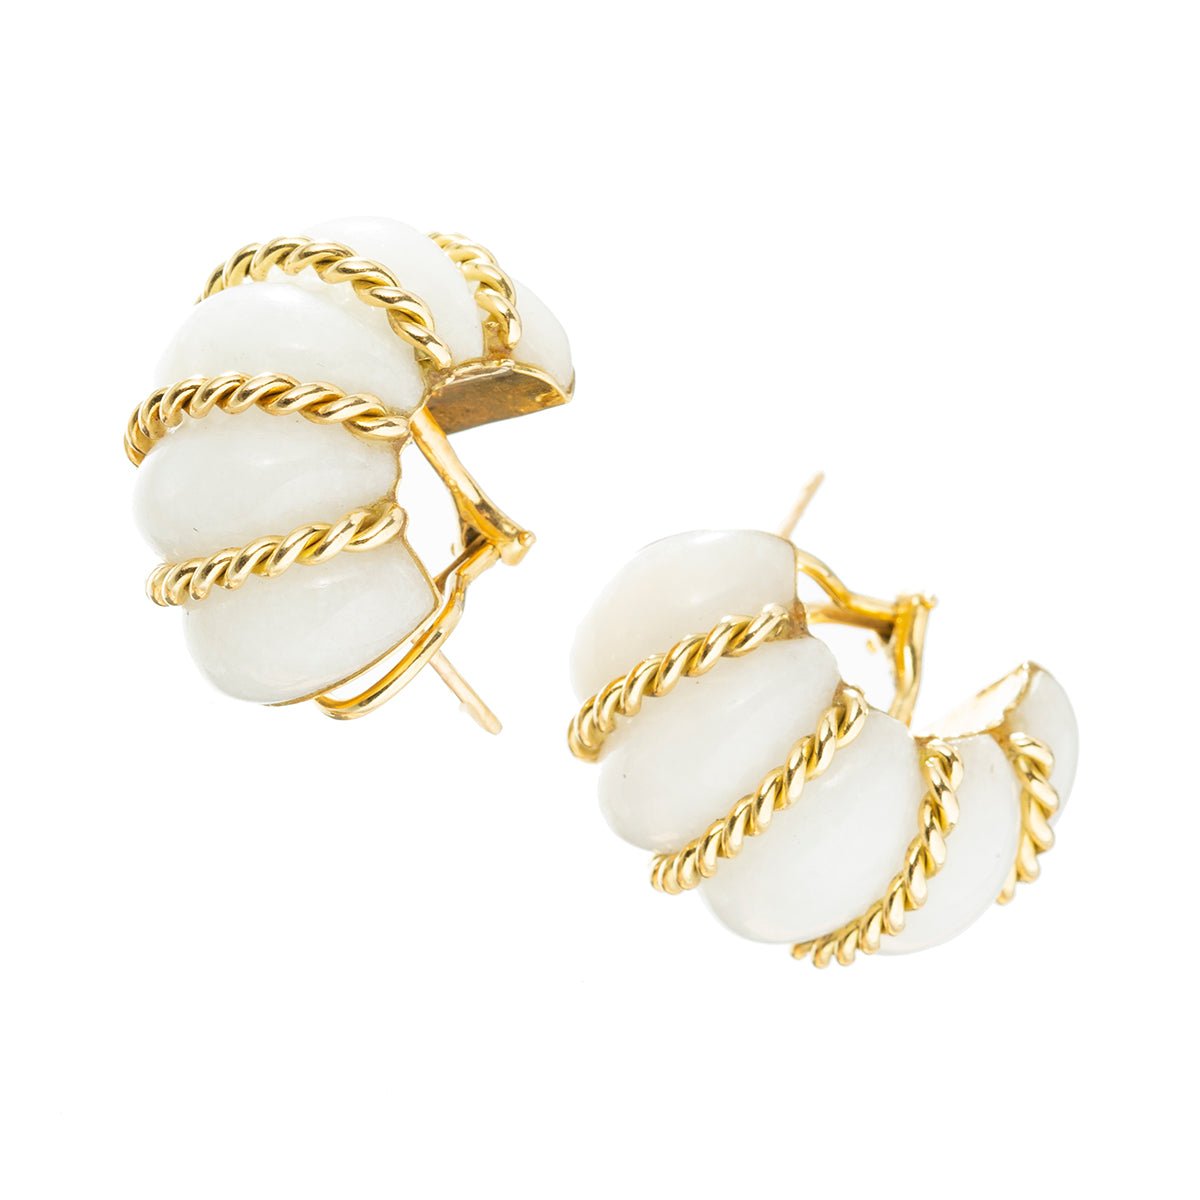 Estate Collection - Seaman Schepps White Jade Shrimp Earrings